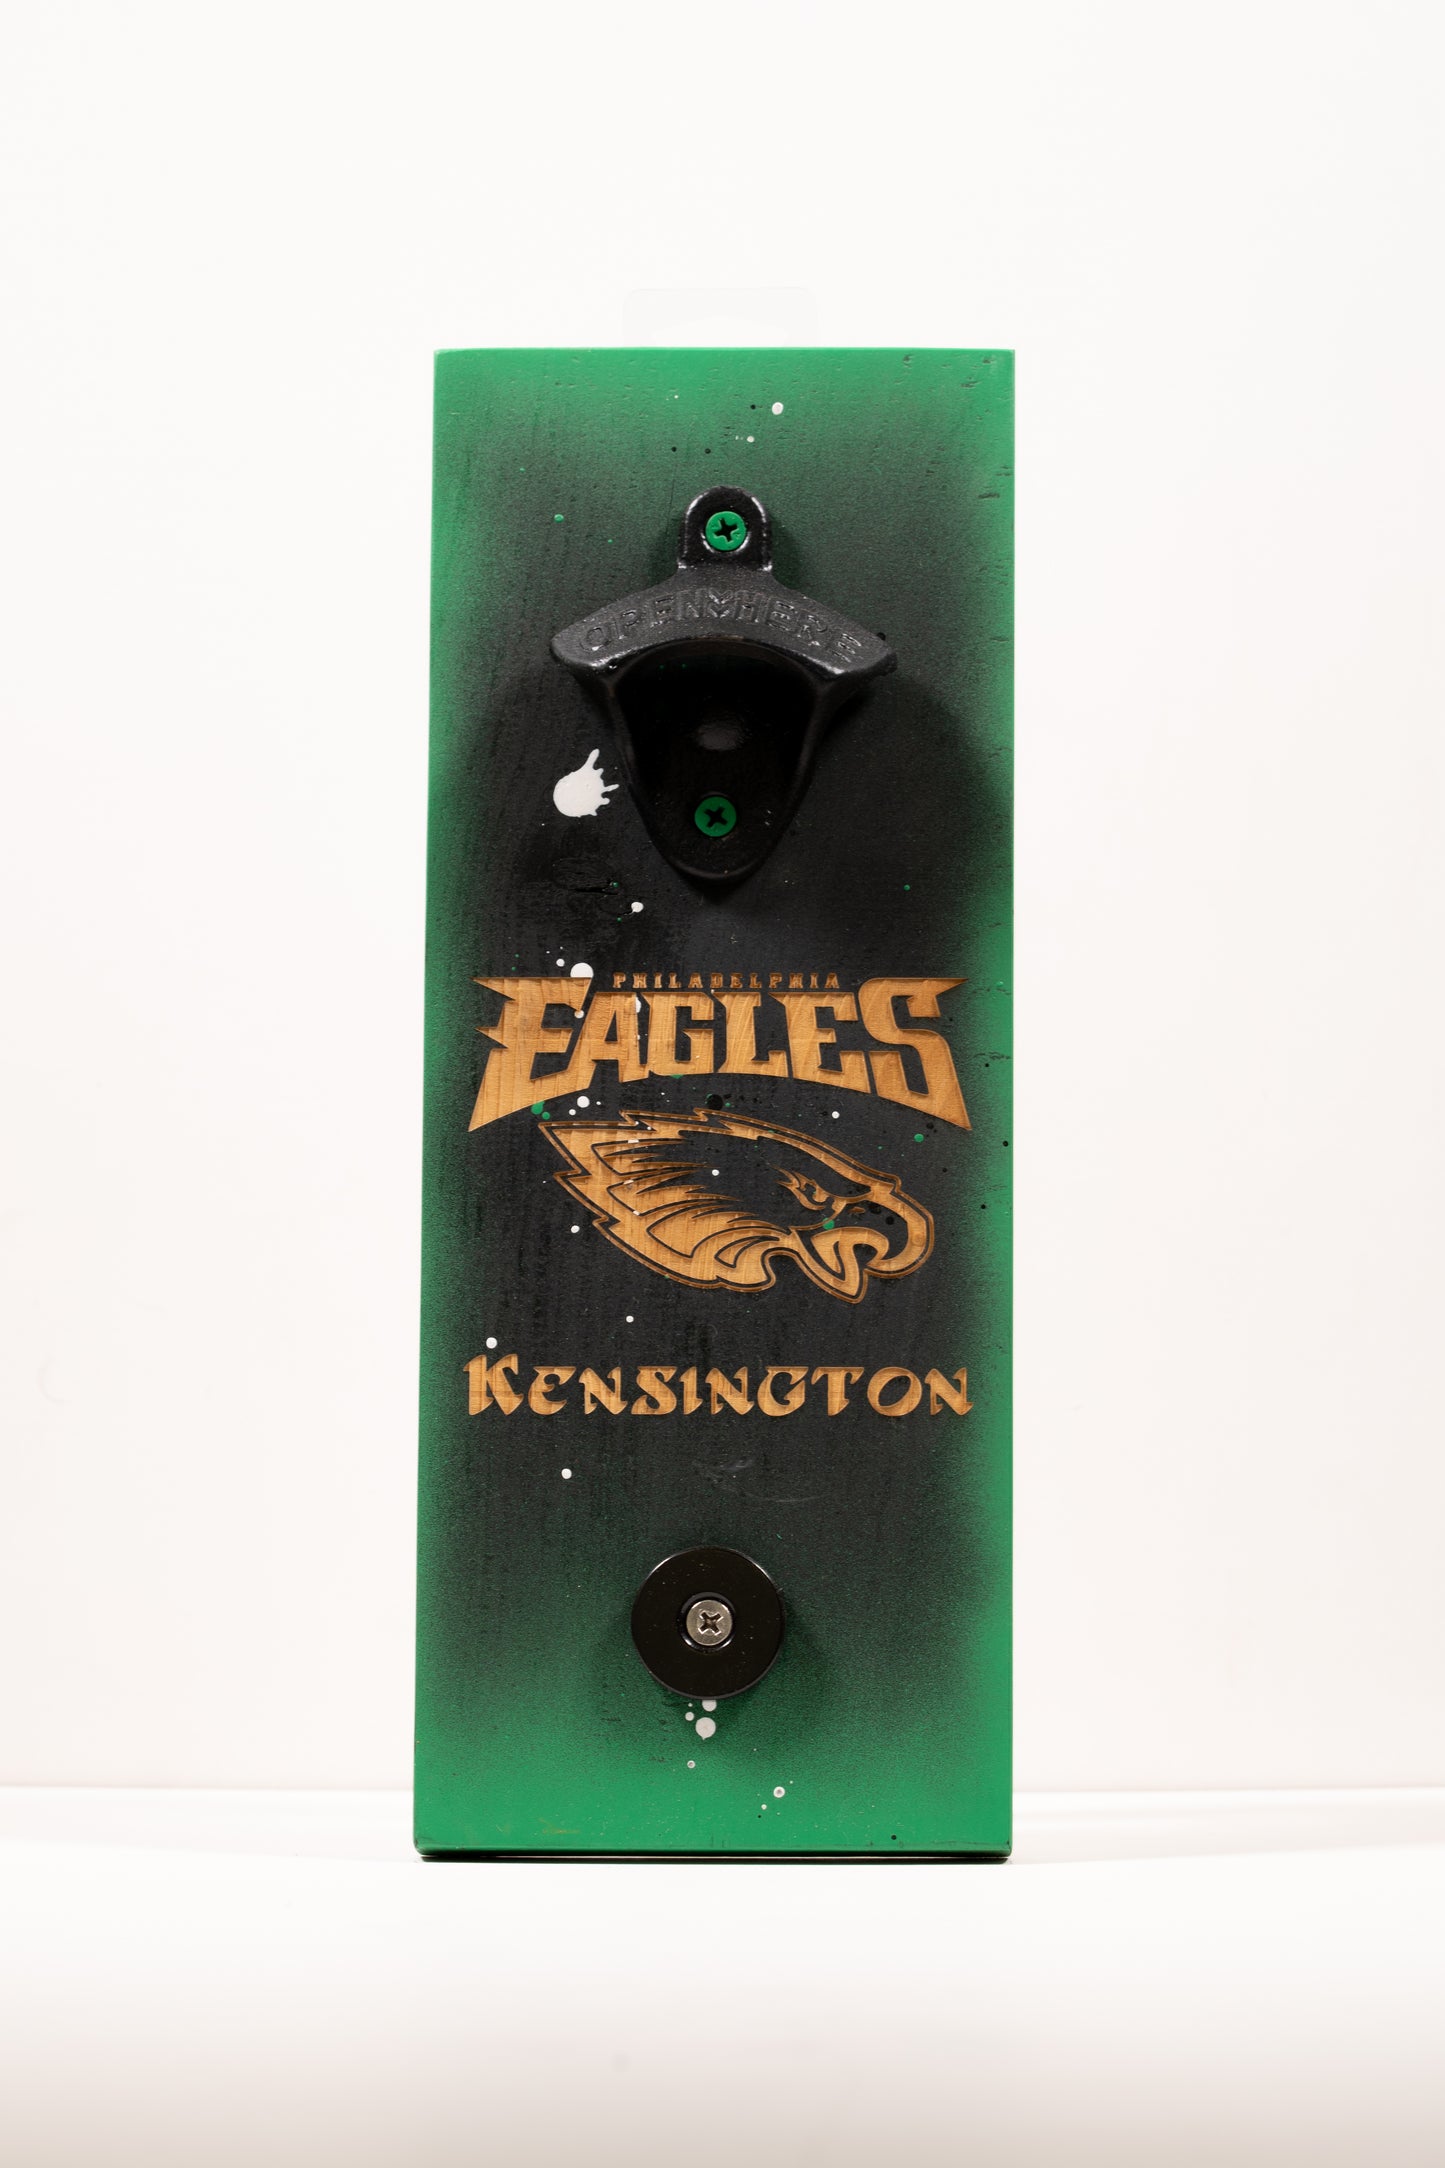 "Eagles" (Kensington) Magnetic Beer Bottle Opener